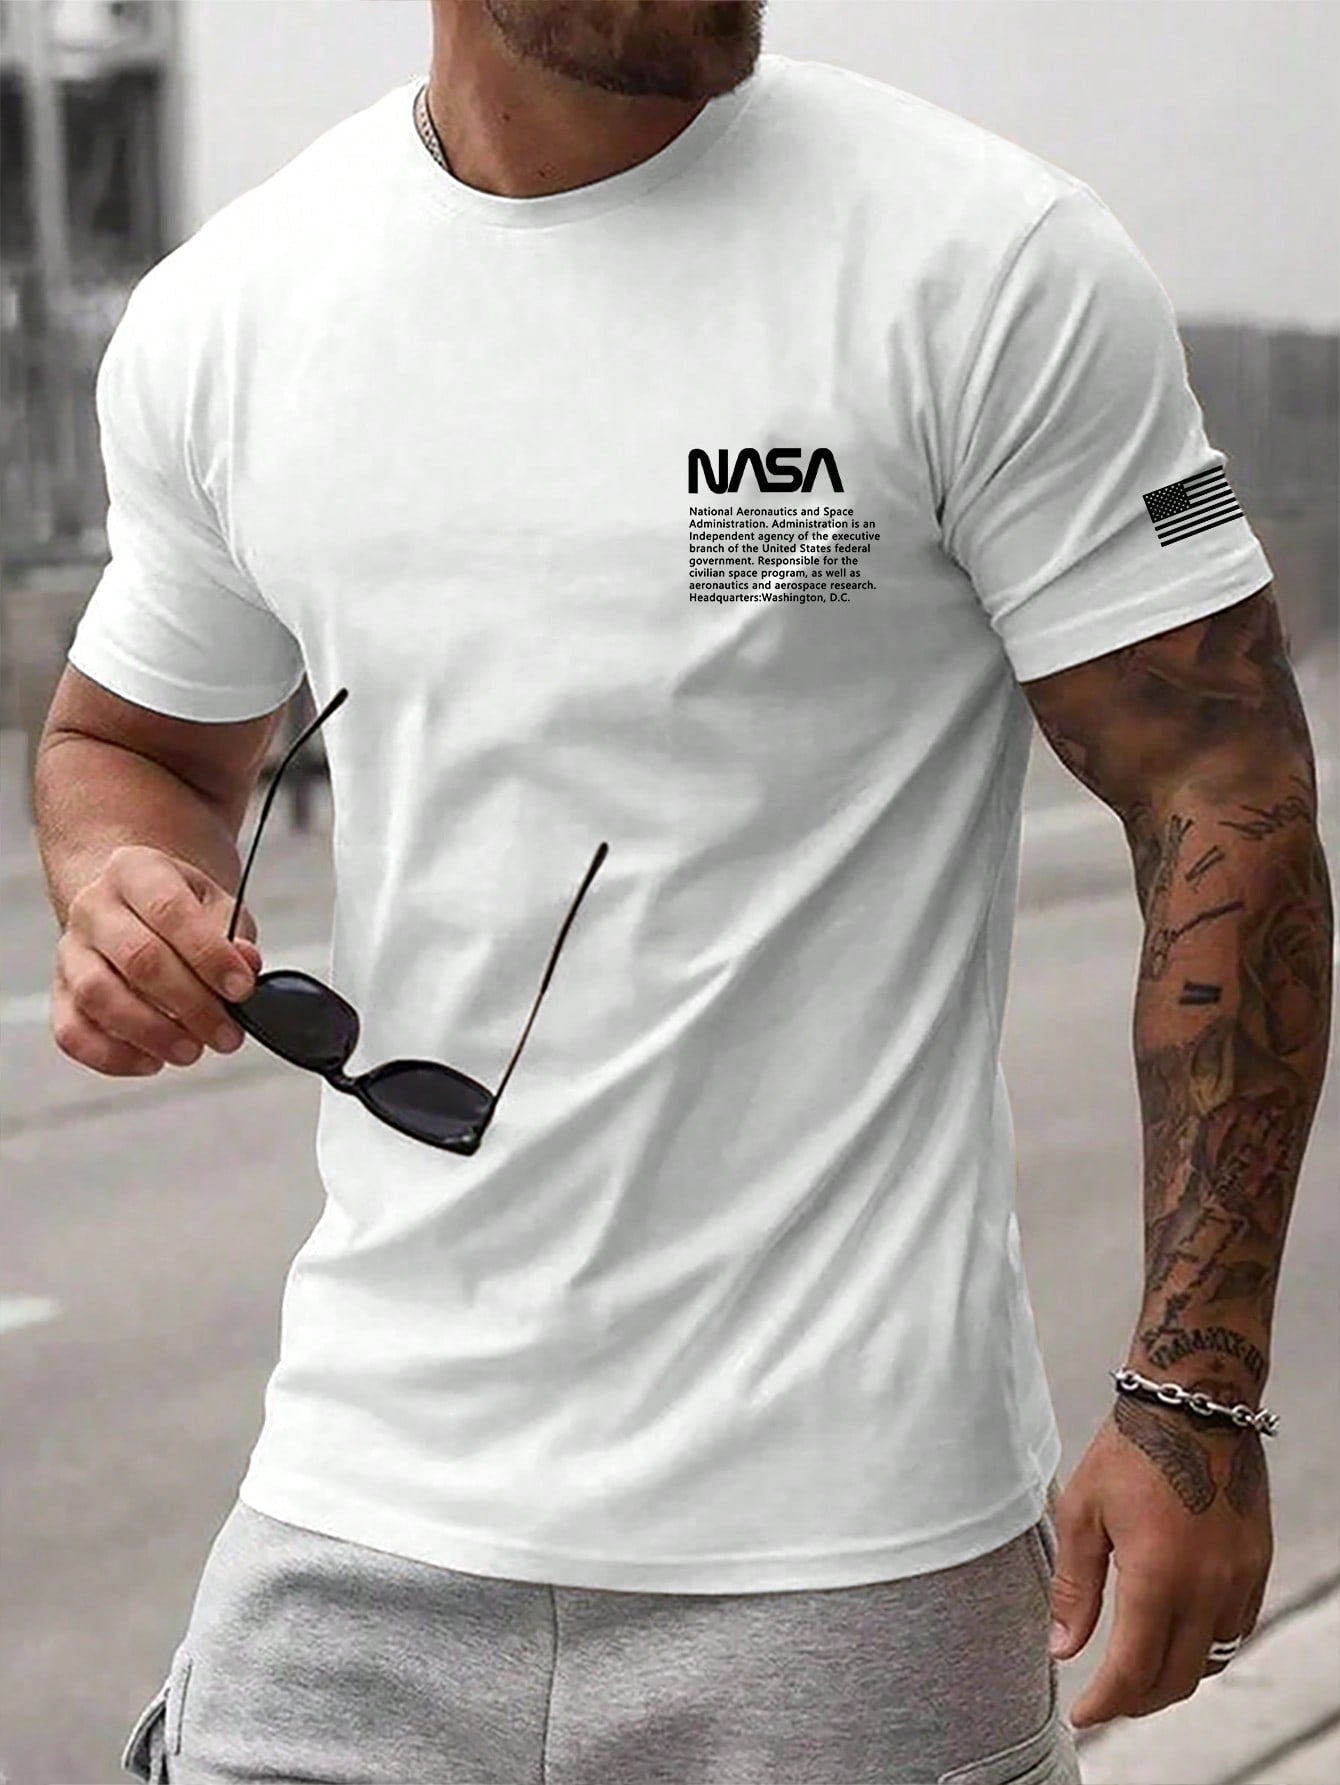 Men's Casual Short Sleeve Slogan T-shirt, Round Neck, Regular Fit, Polyester